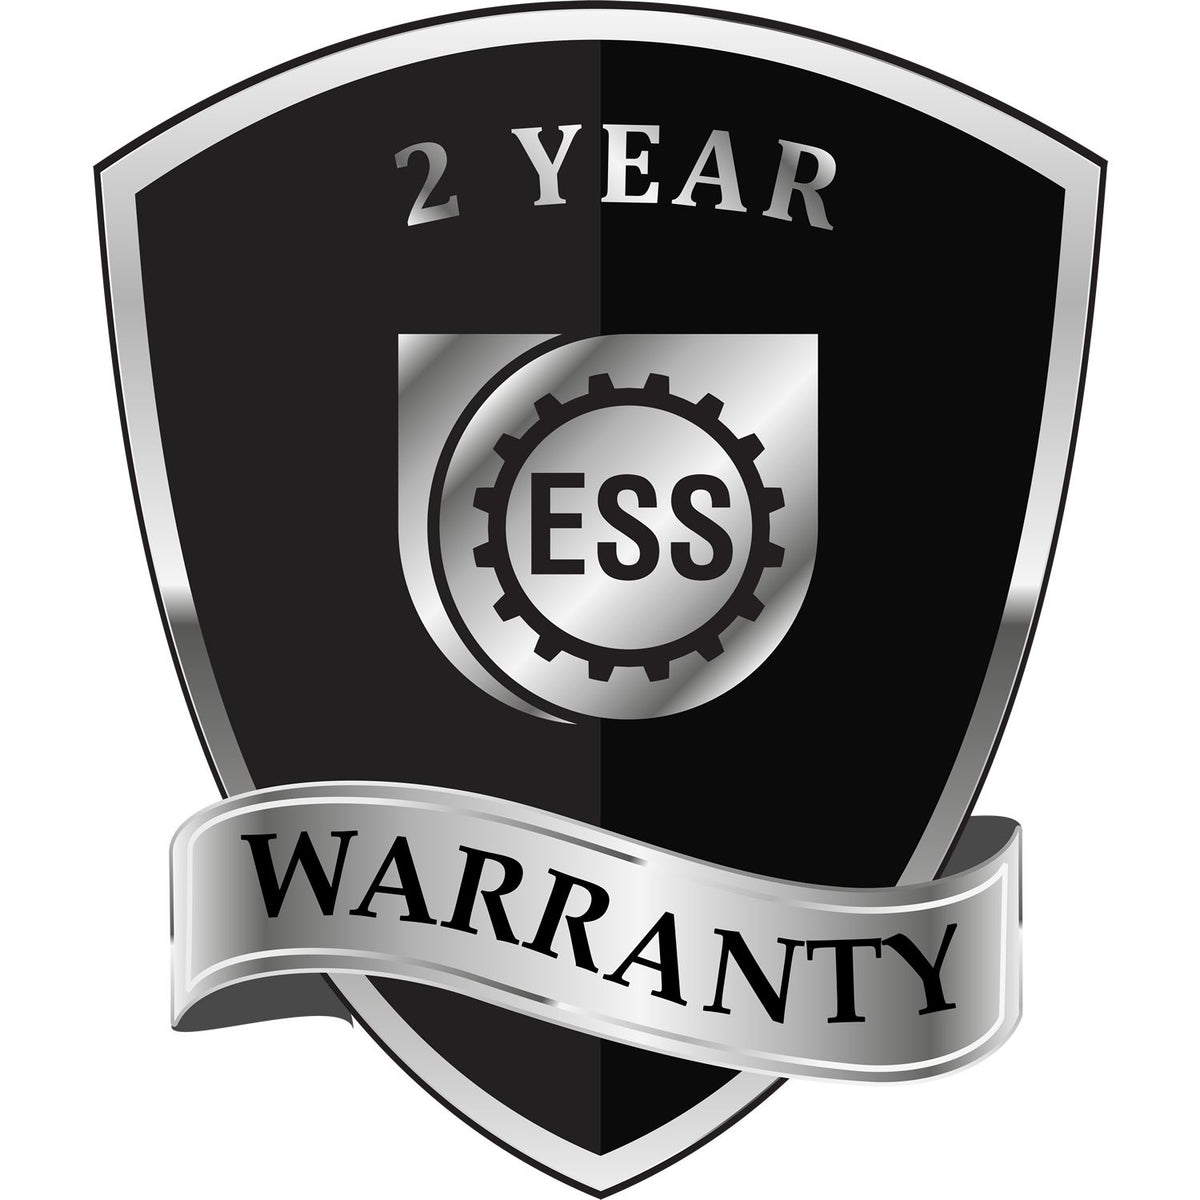 A badge or emblem showing a warranty icon for the Handheld Delaware Land Surveyor Seal